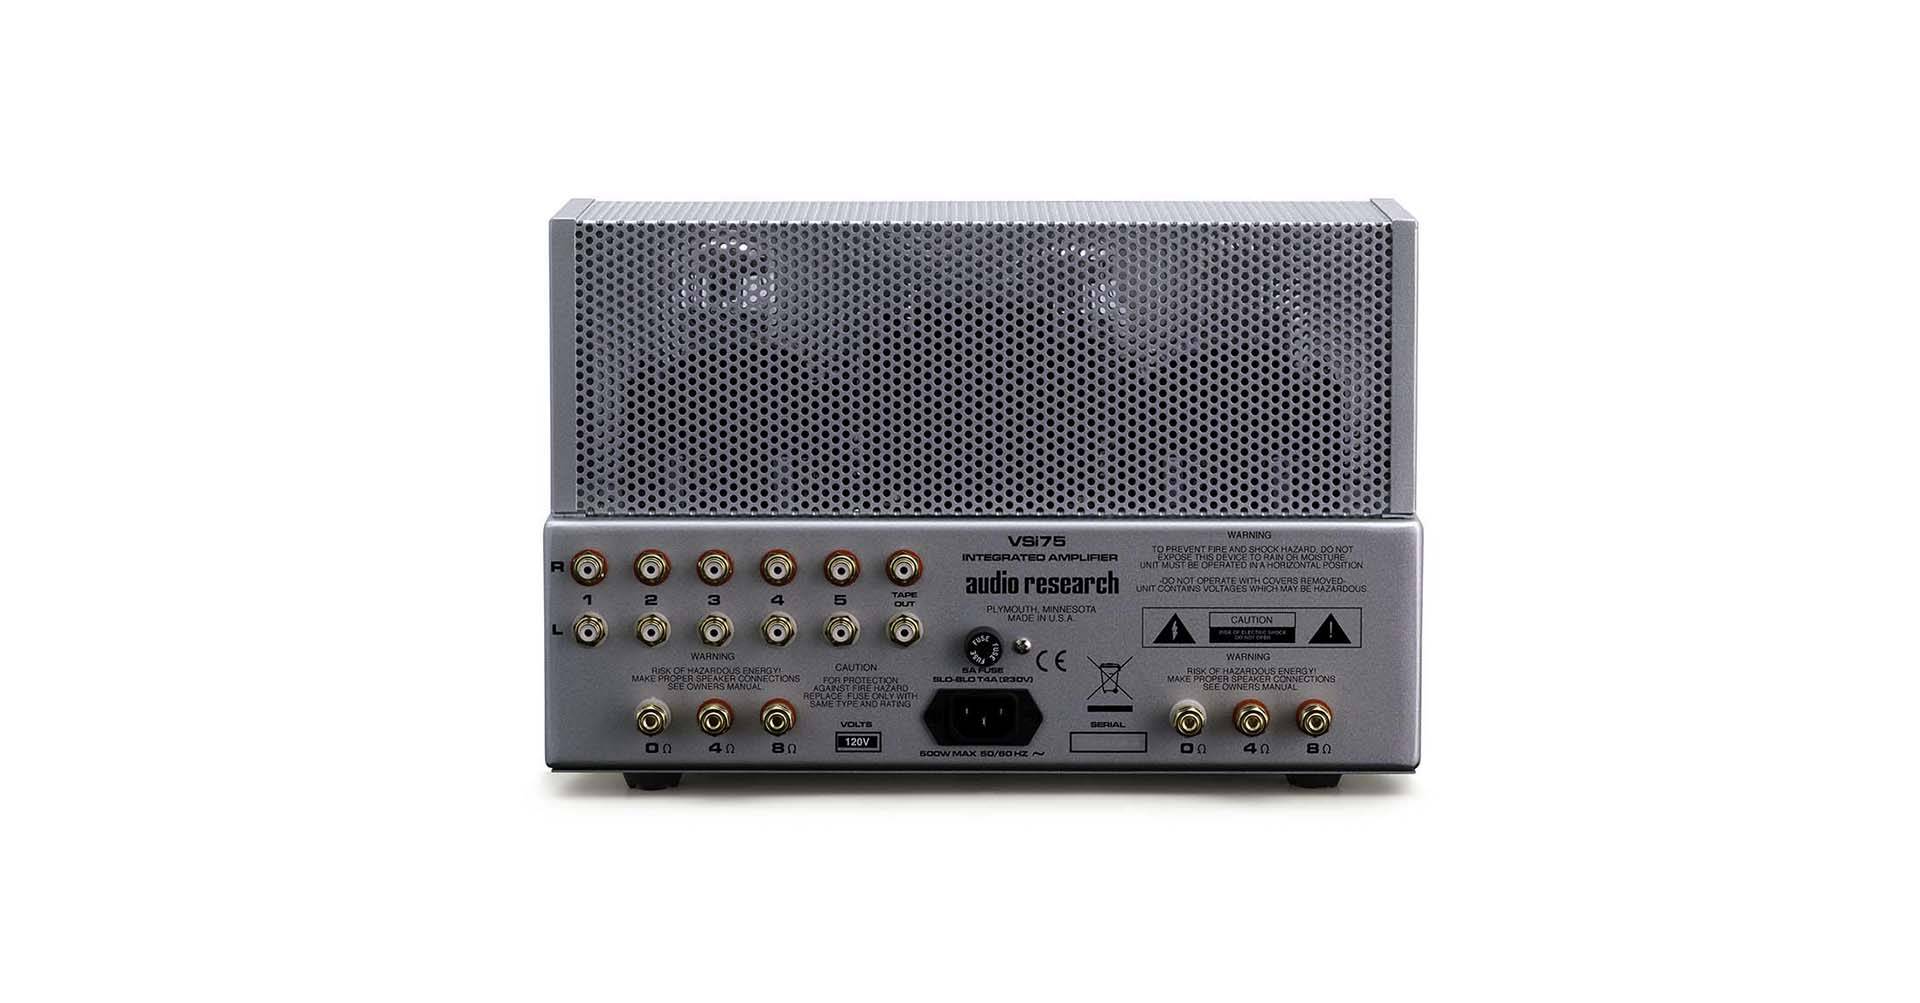 Audio Research VSi-75